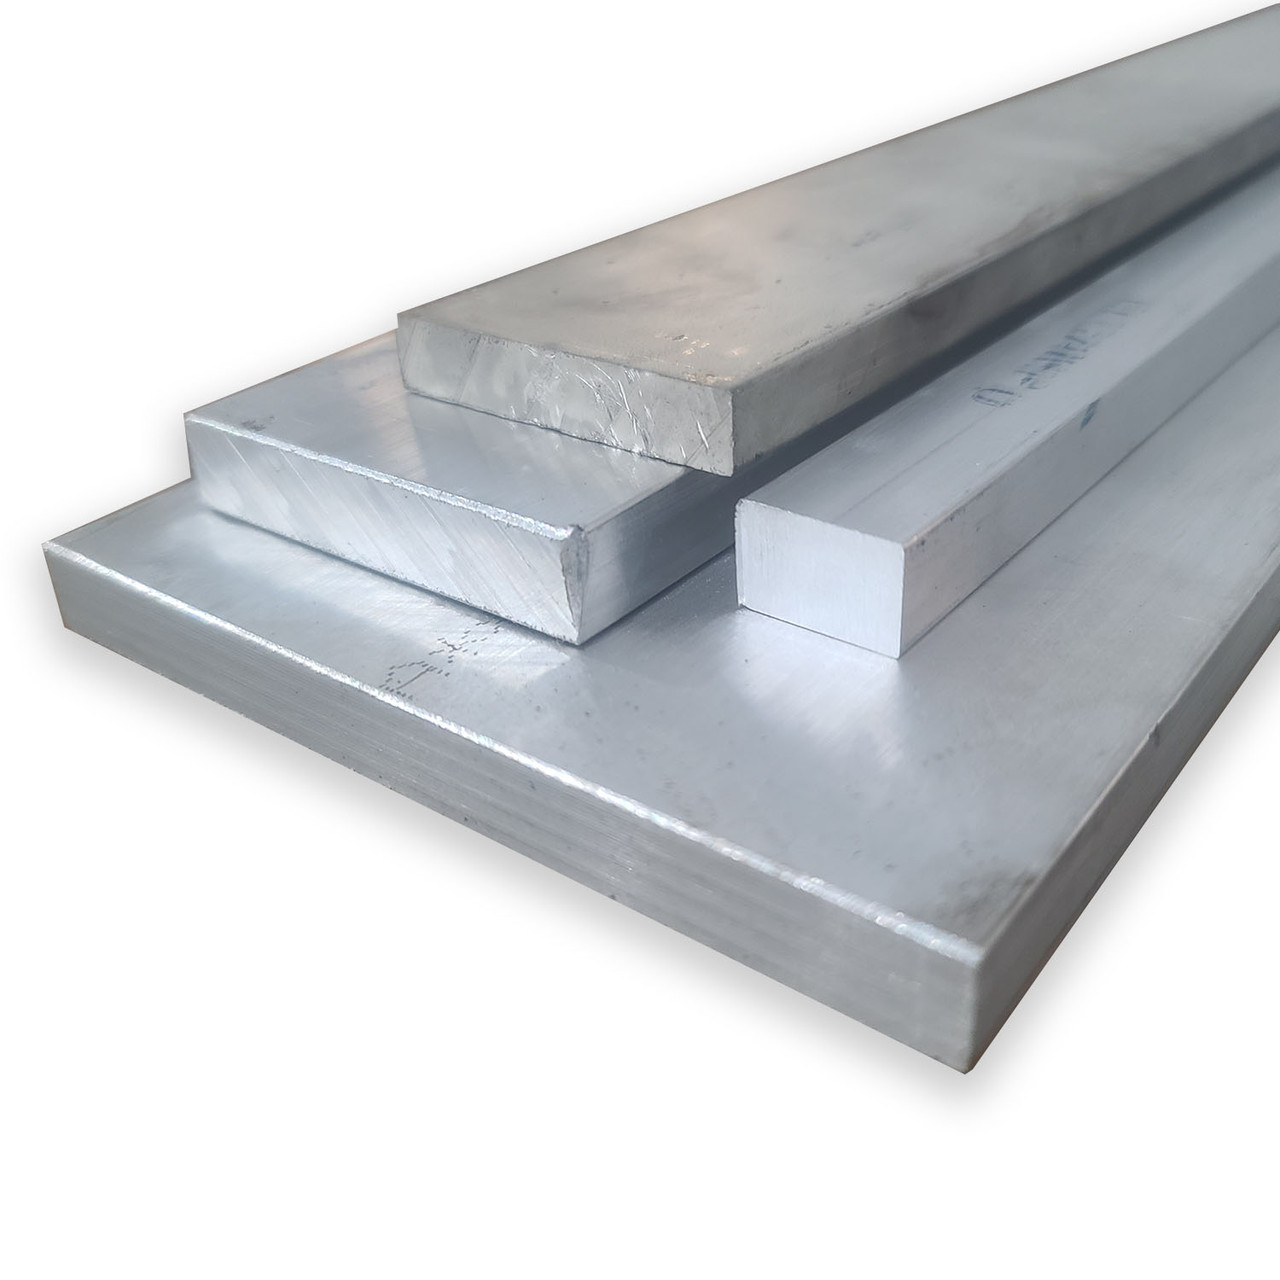 0.500" x 0.750" x 47", 2024-T351 Aluminum Flat Bar